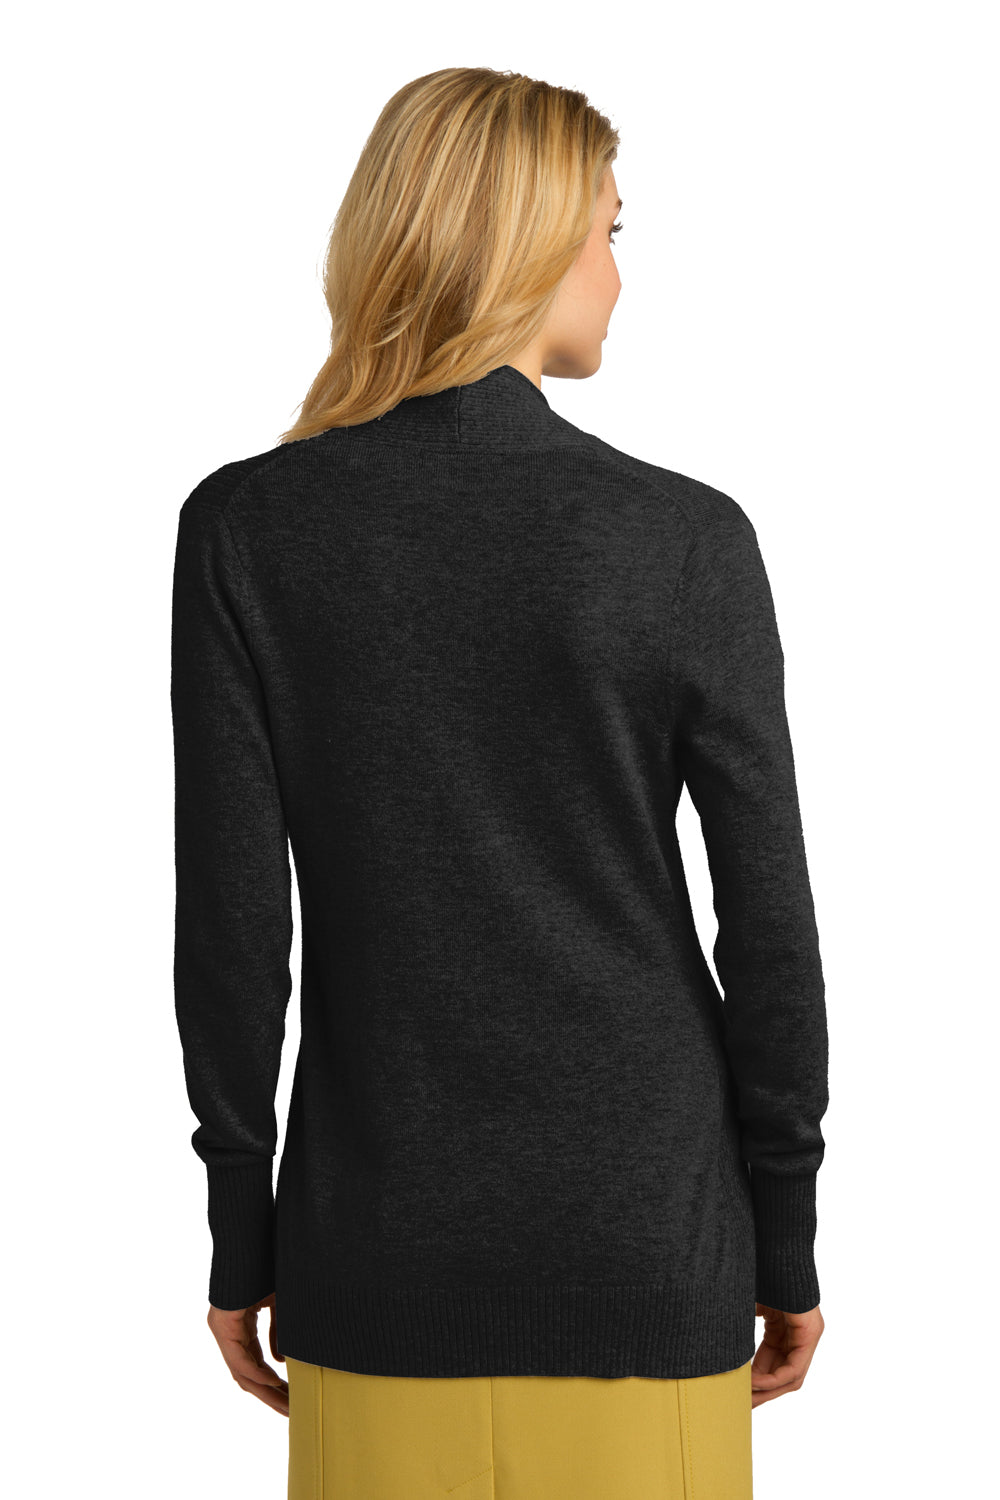 Port Authority LSW289 Womens Long Sleeve Cardigan Sweater Black Back